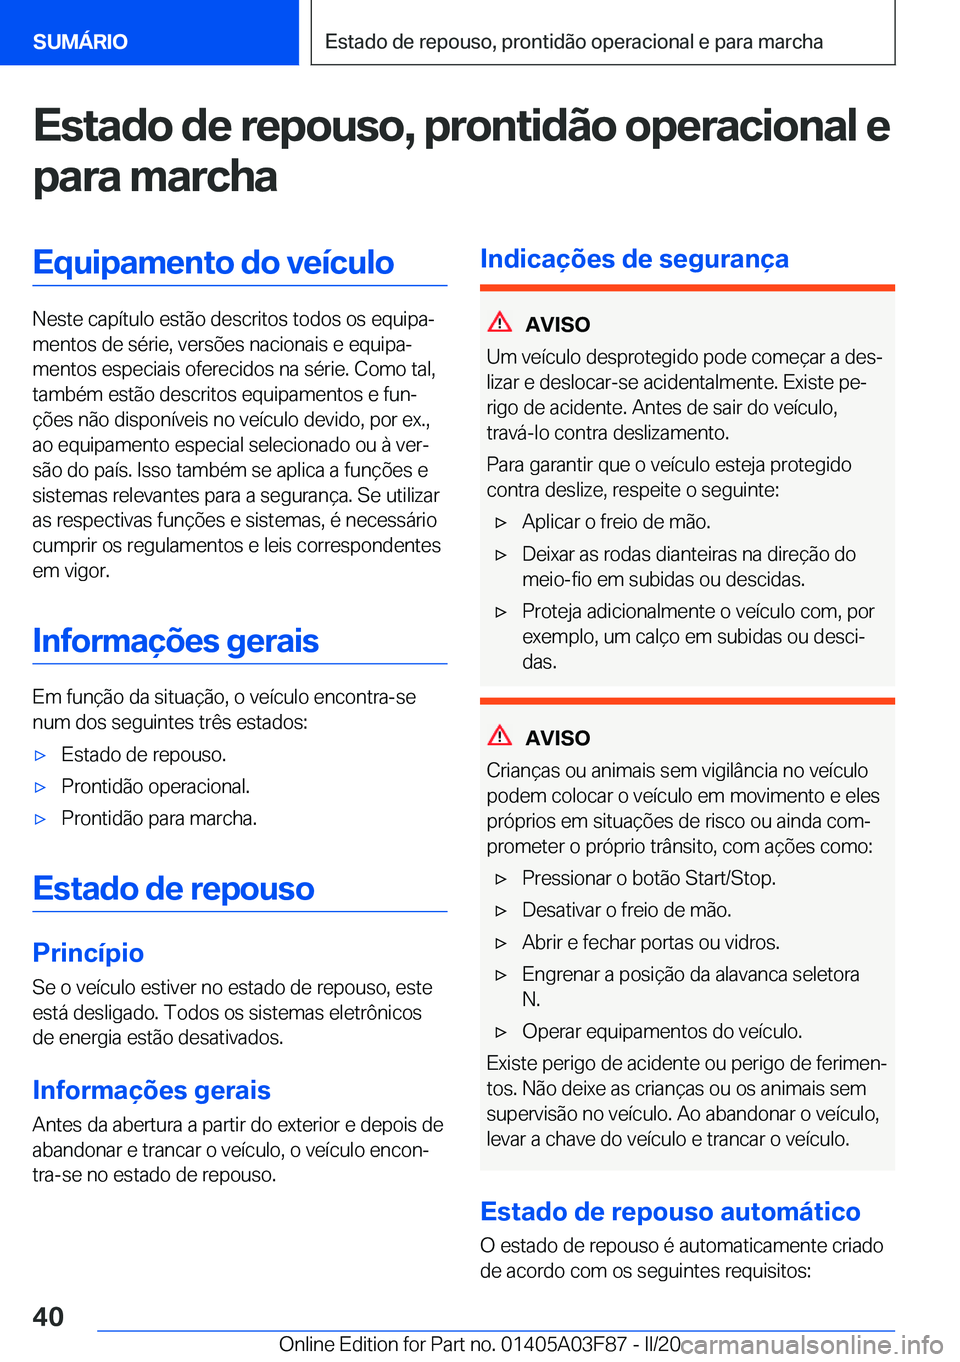 BMW 3 SERIES 2020  Manual do condutor (in Portuguese) �E�s�t�a�d�o��d�e��r�e�p�o�u�s�o�,��p�r�o�n�t�i�d�ã�o��o�p�e�r�a�c�i�o�n�a�l��e
�p�a�r�a��m�a�r�c�h�a�E�q�u�i�p�a�m�e�n�t�o��d�o��v�e�